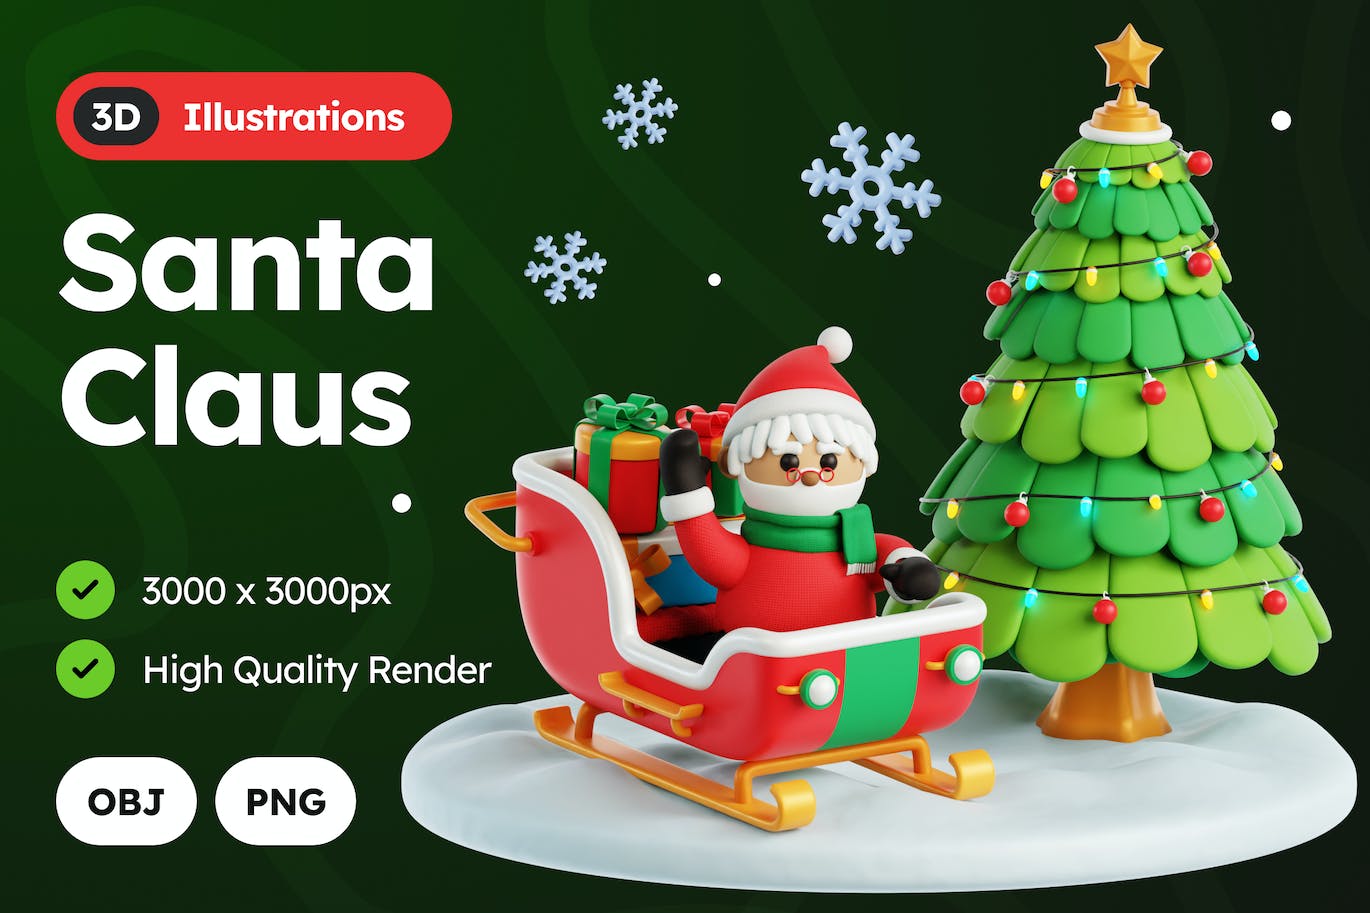 3D 圣诞节圣诞老人图 (PNG,OBJ)